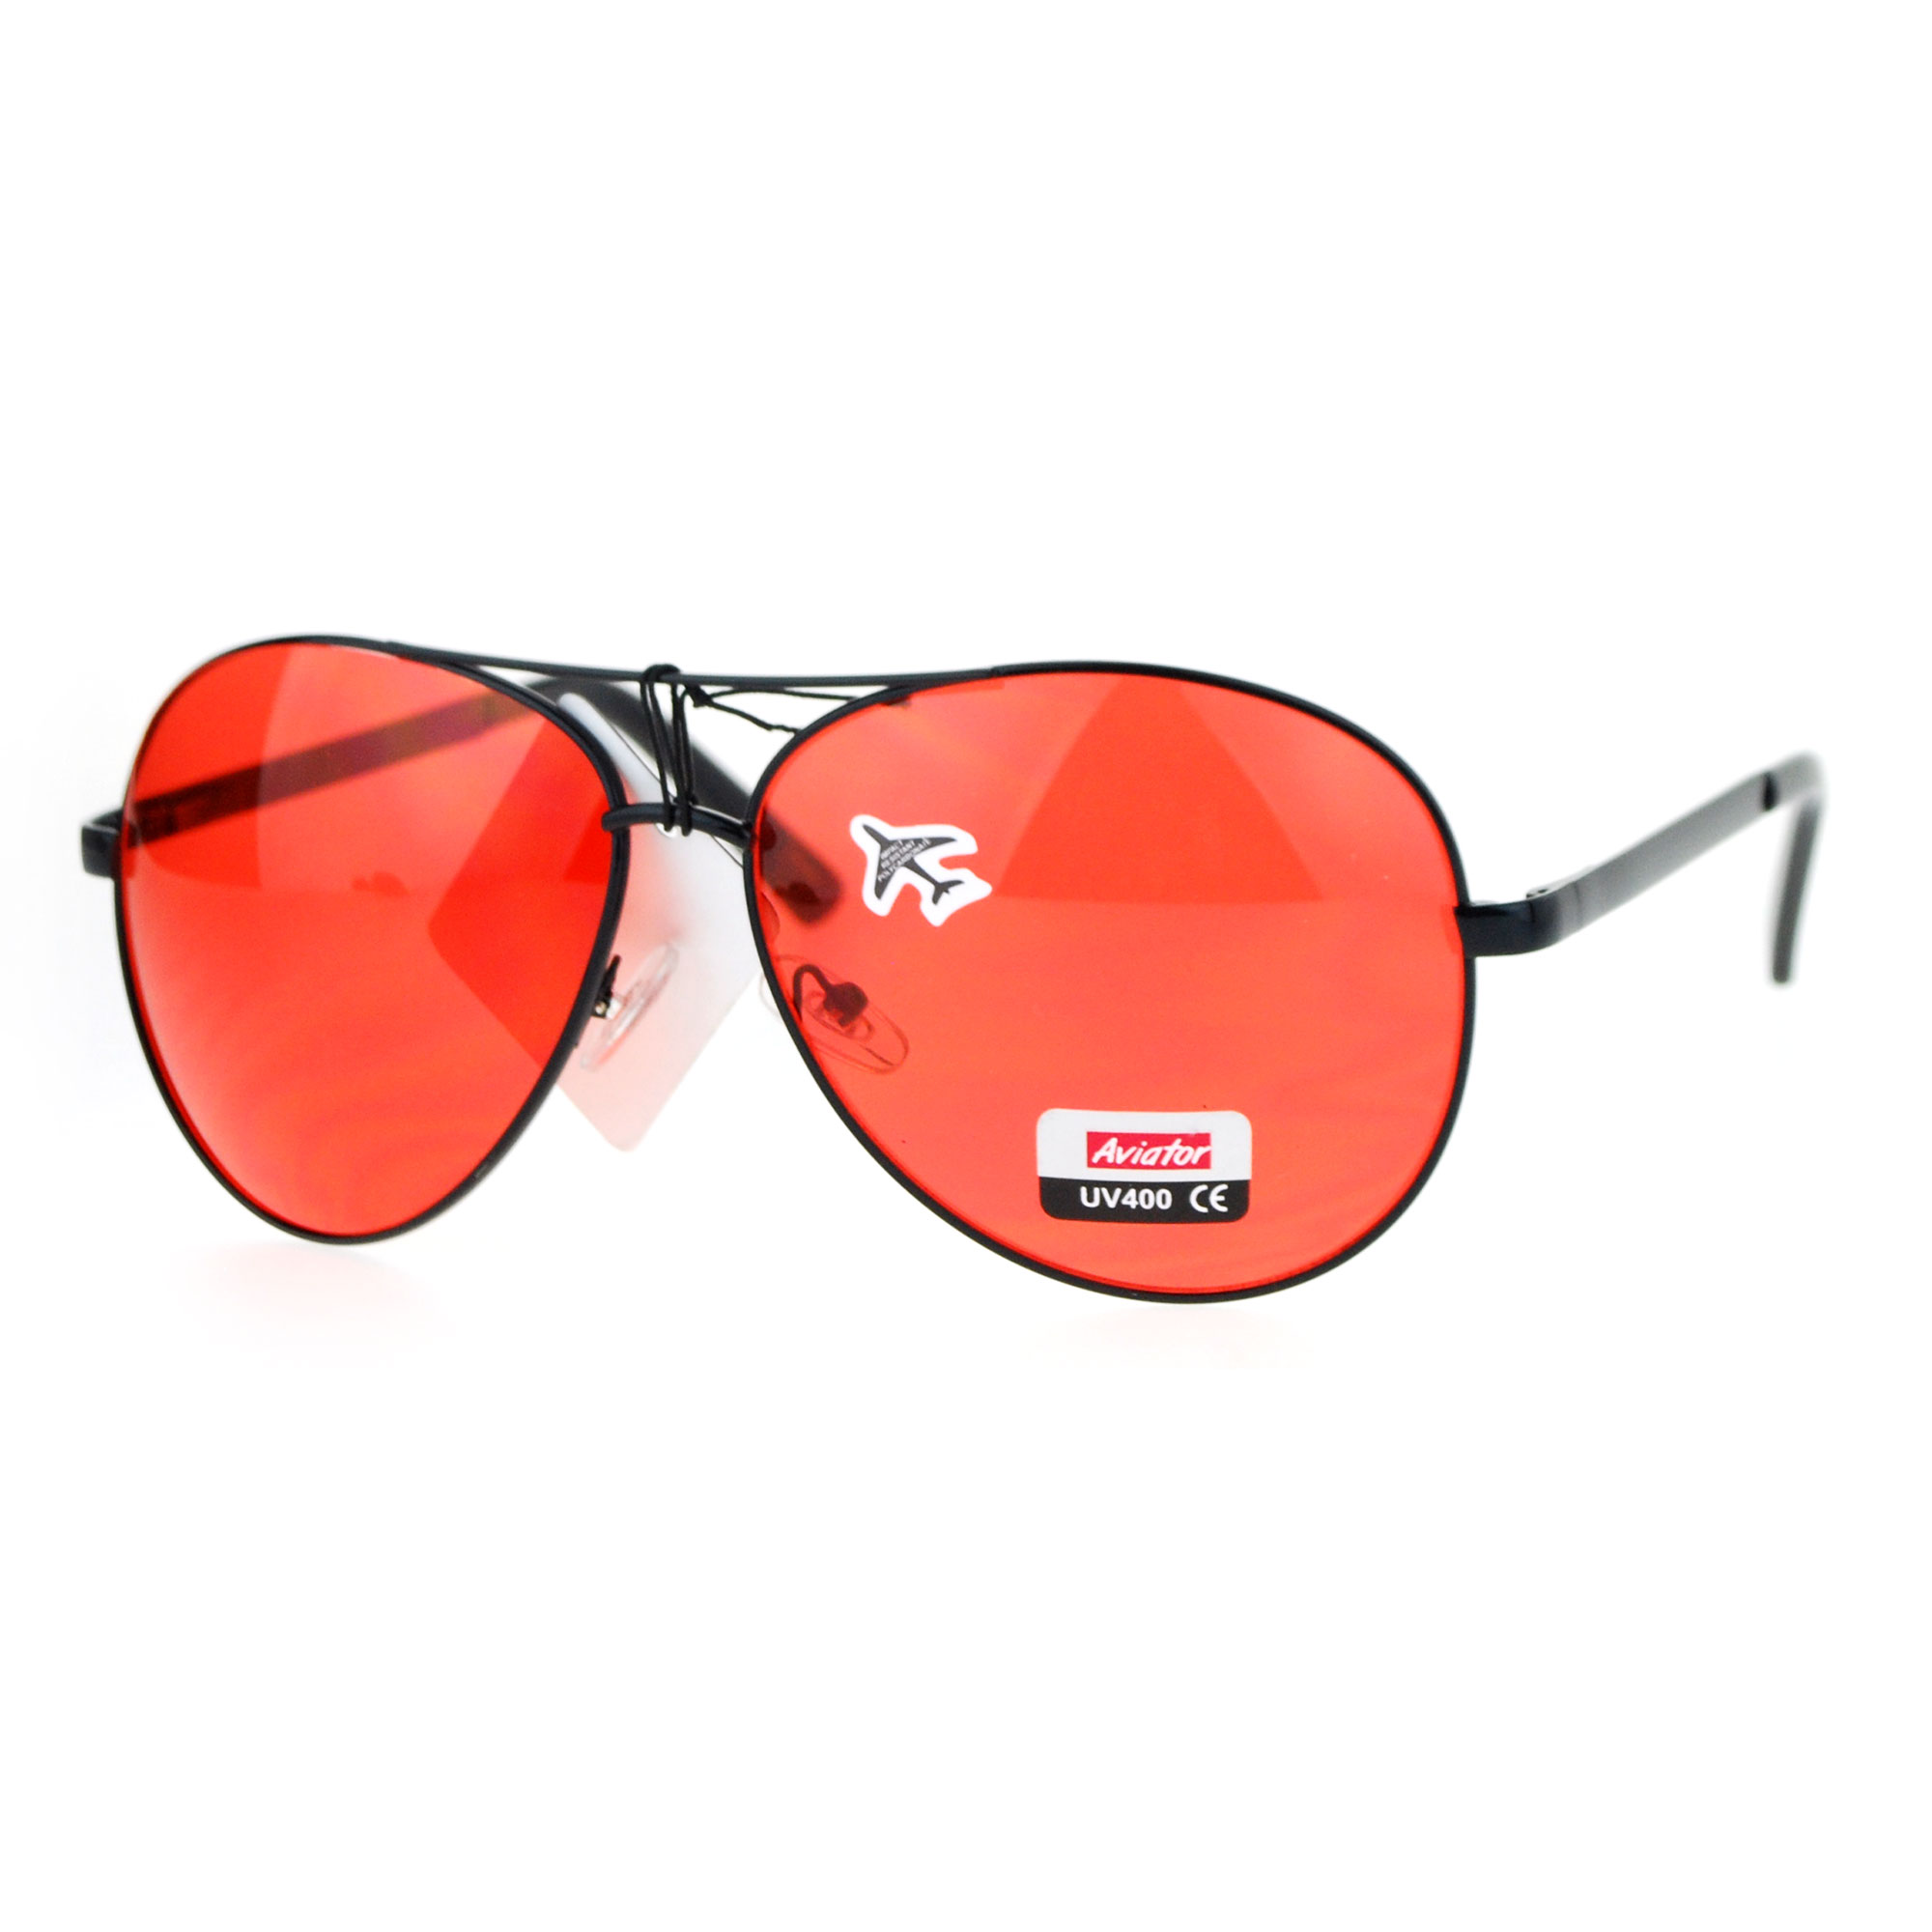 Sa106 Red Lens Hollywood Aviator Metal Rim Sunglasses Ebay